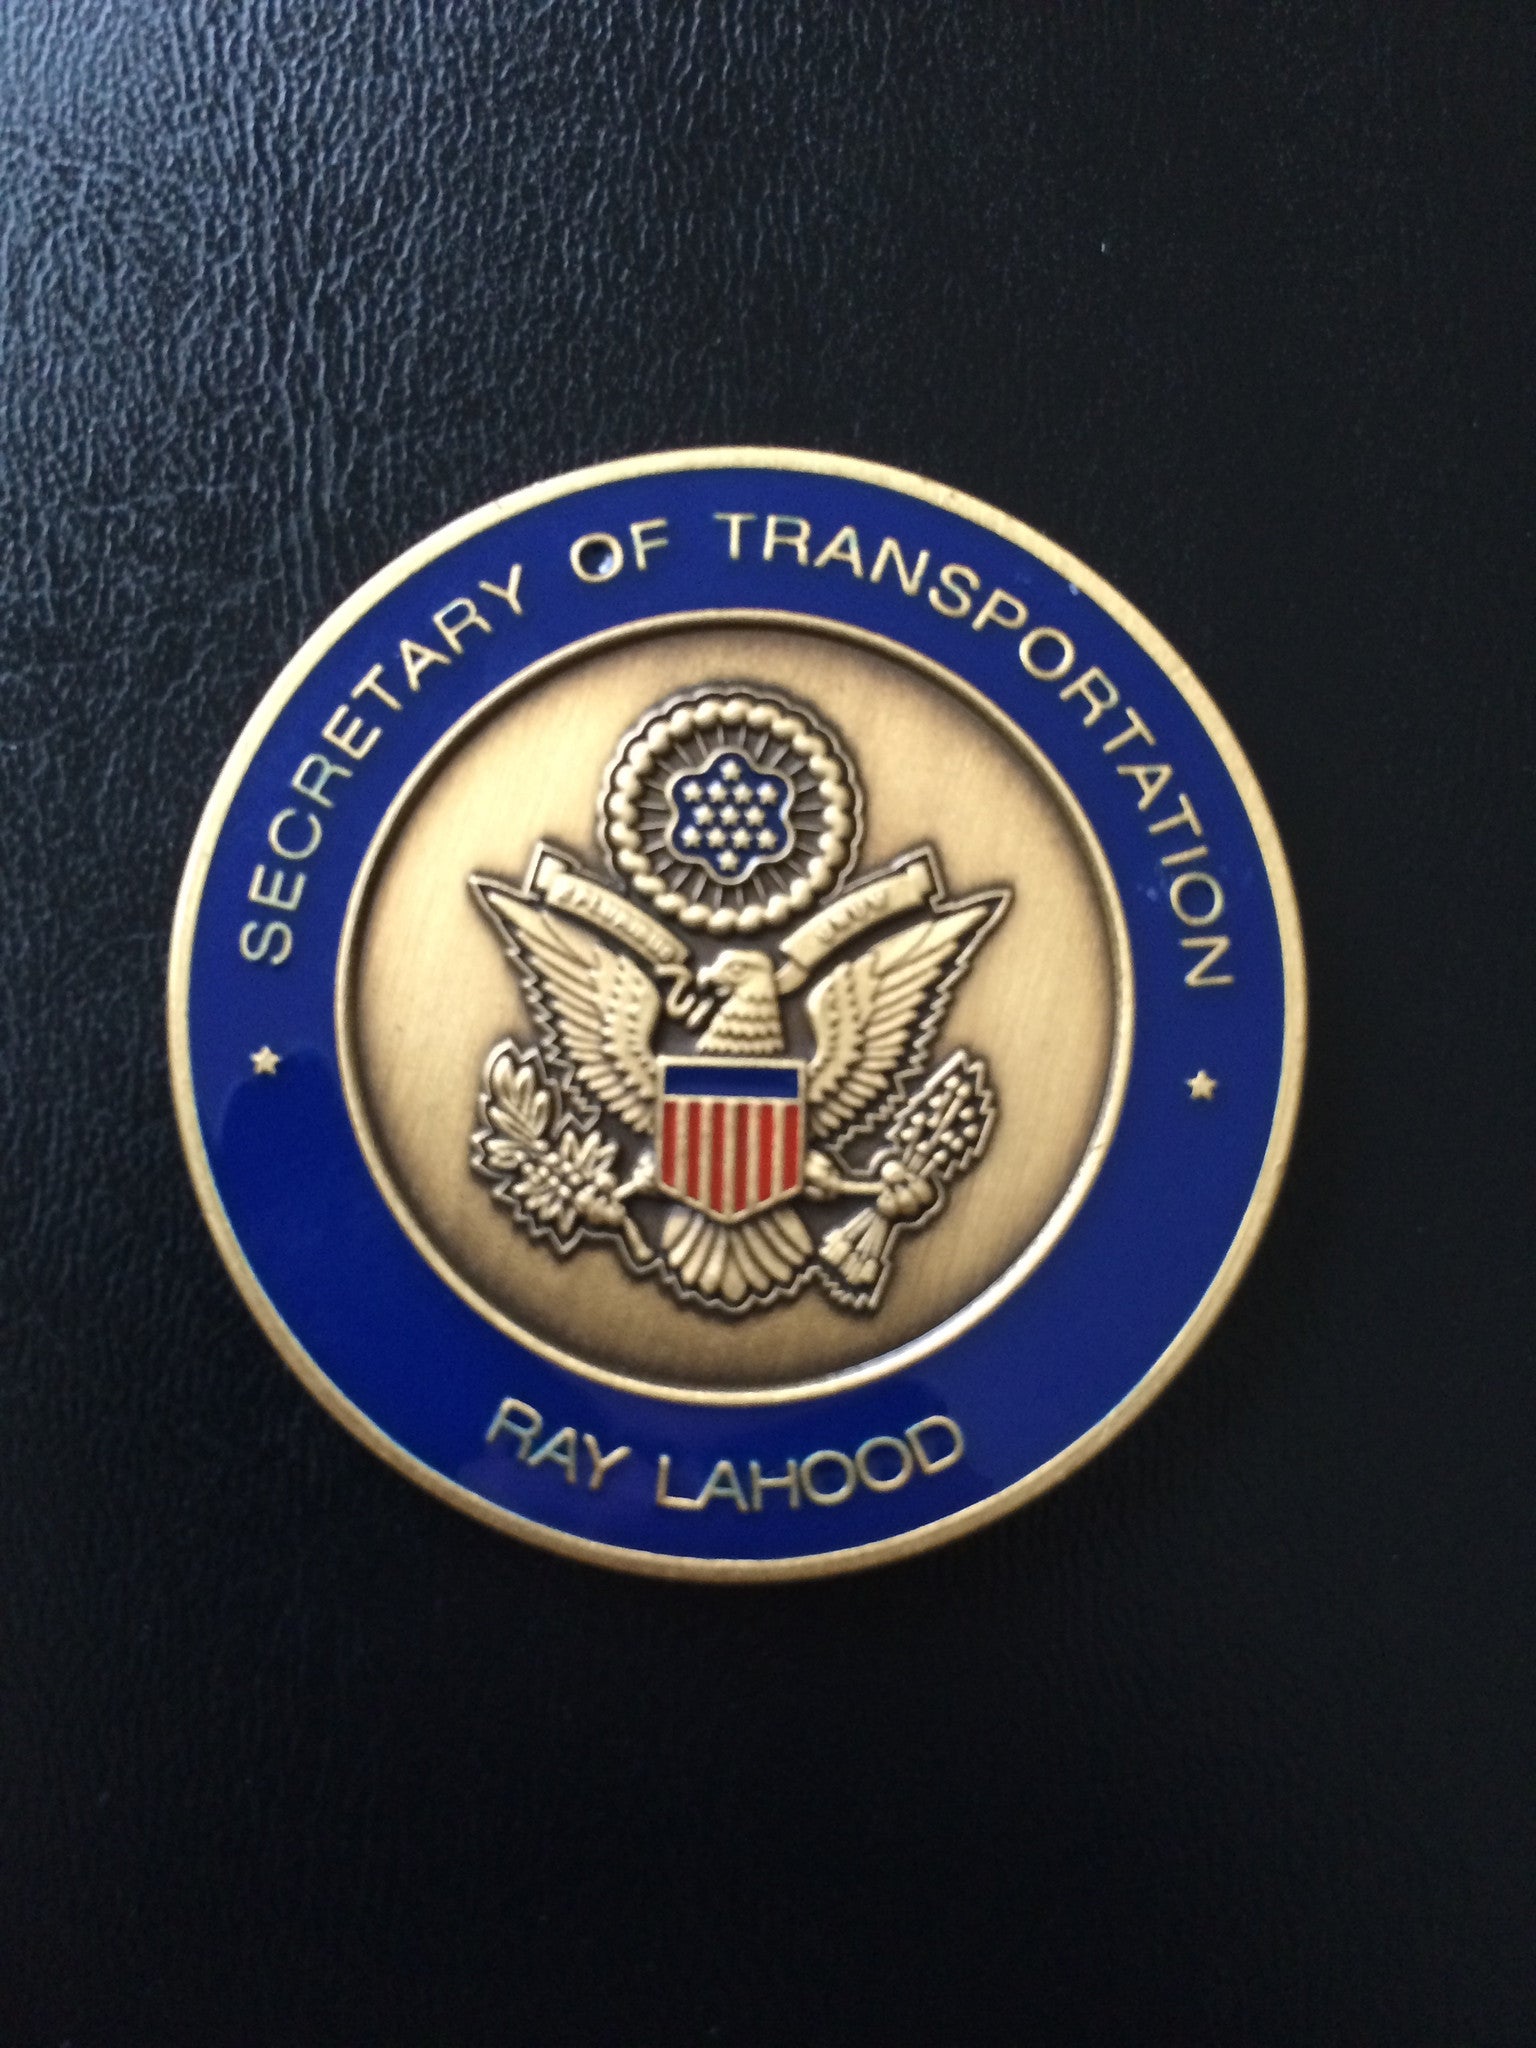 Secretary of Transportation (16th) Ray H. LaHood